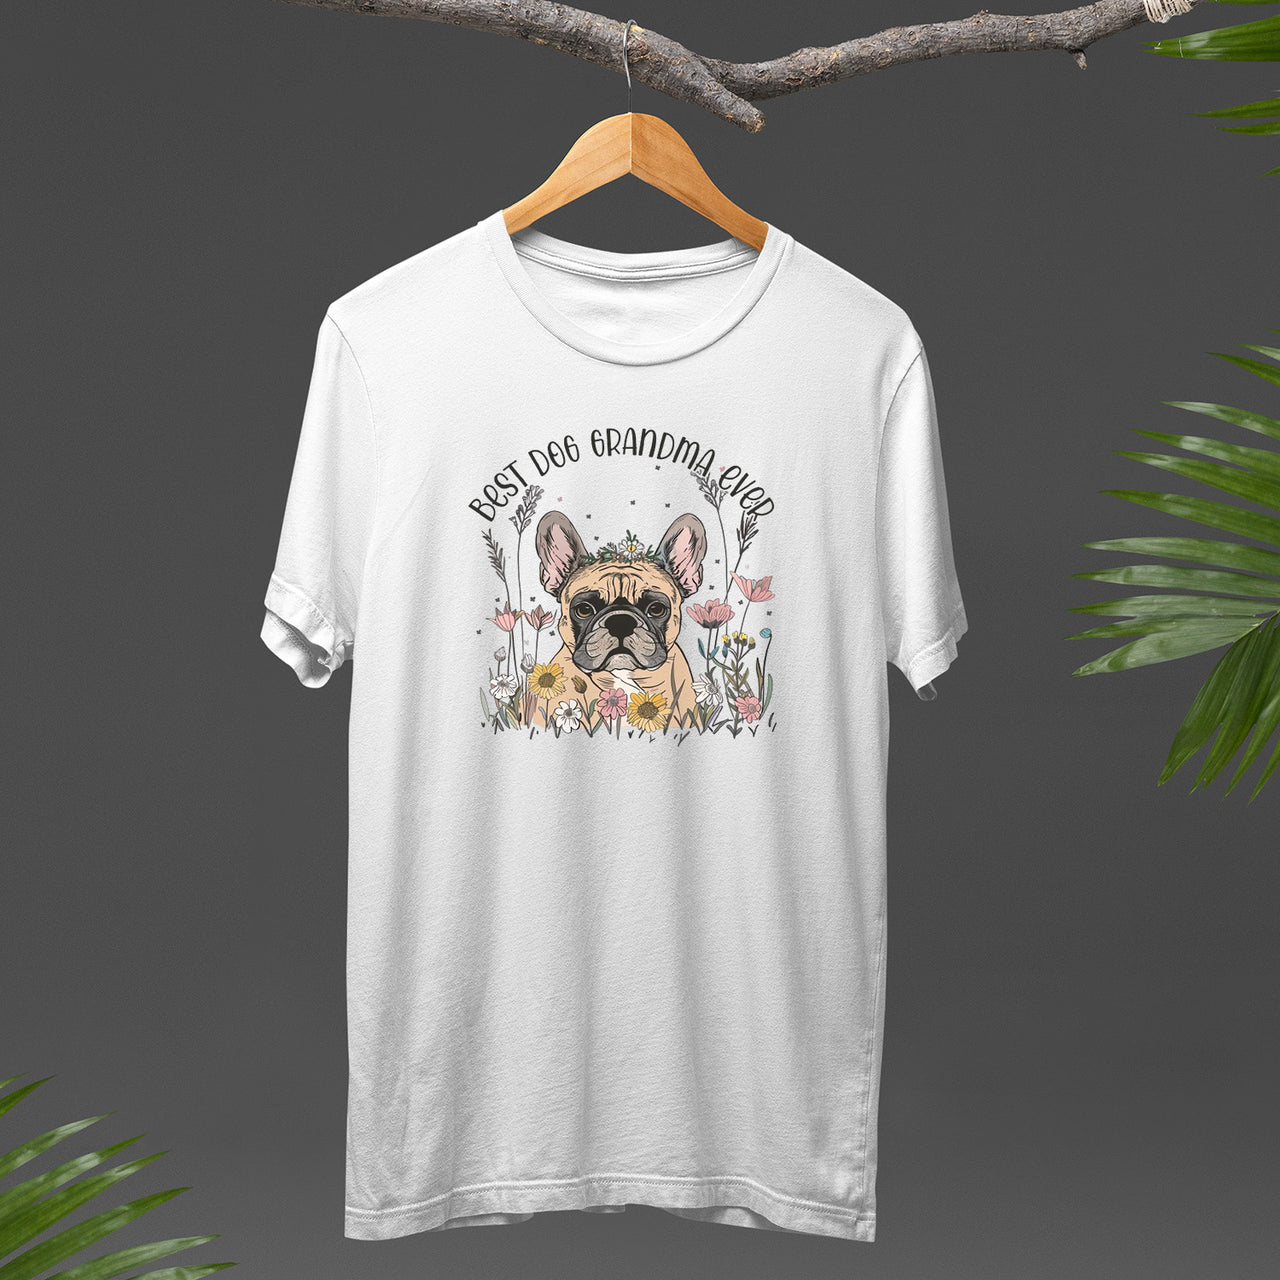 French Bulldog T-shirt, Pet Lover Shirt, Dog Lover Shirt, Best Dog Grandma Ever T-Shirt, Dog Owner Shirt, Gift For Dog Grandma, Funny Dog Shirts, Women Dog T-Shirt, Mother's Day Gift, Dog Lover Wife Gifts, Dog Shirt